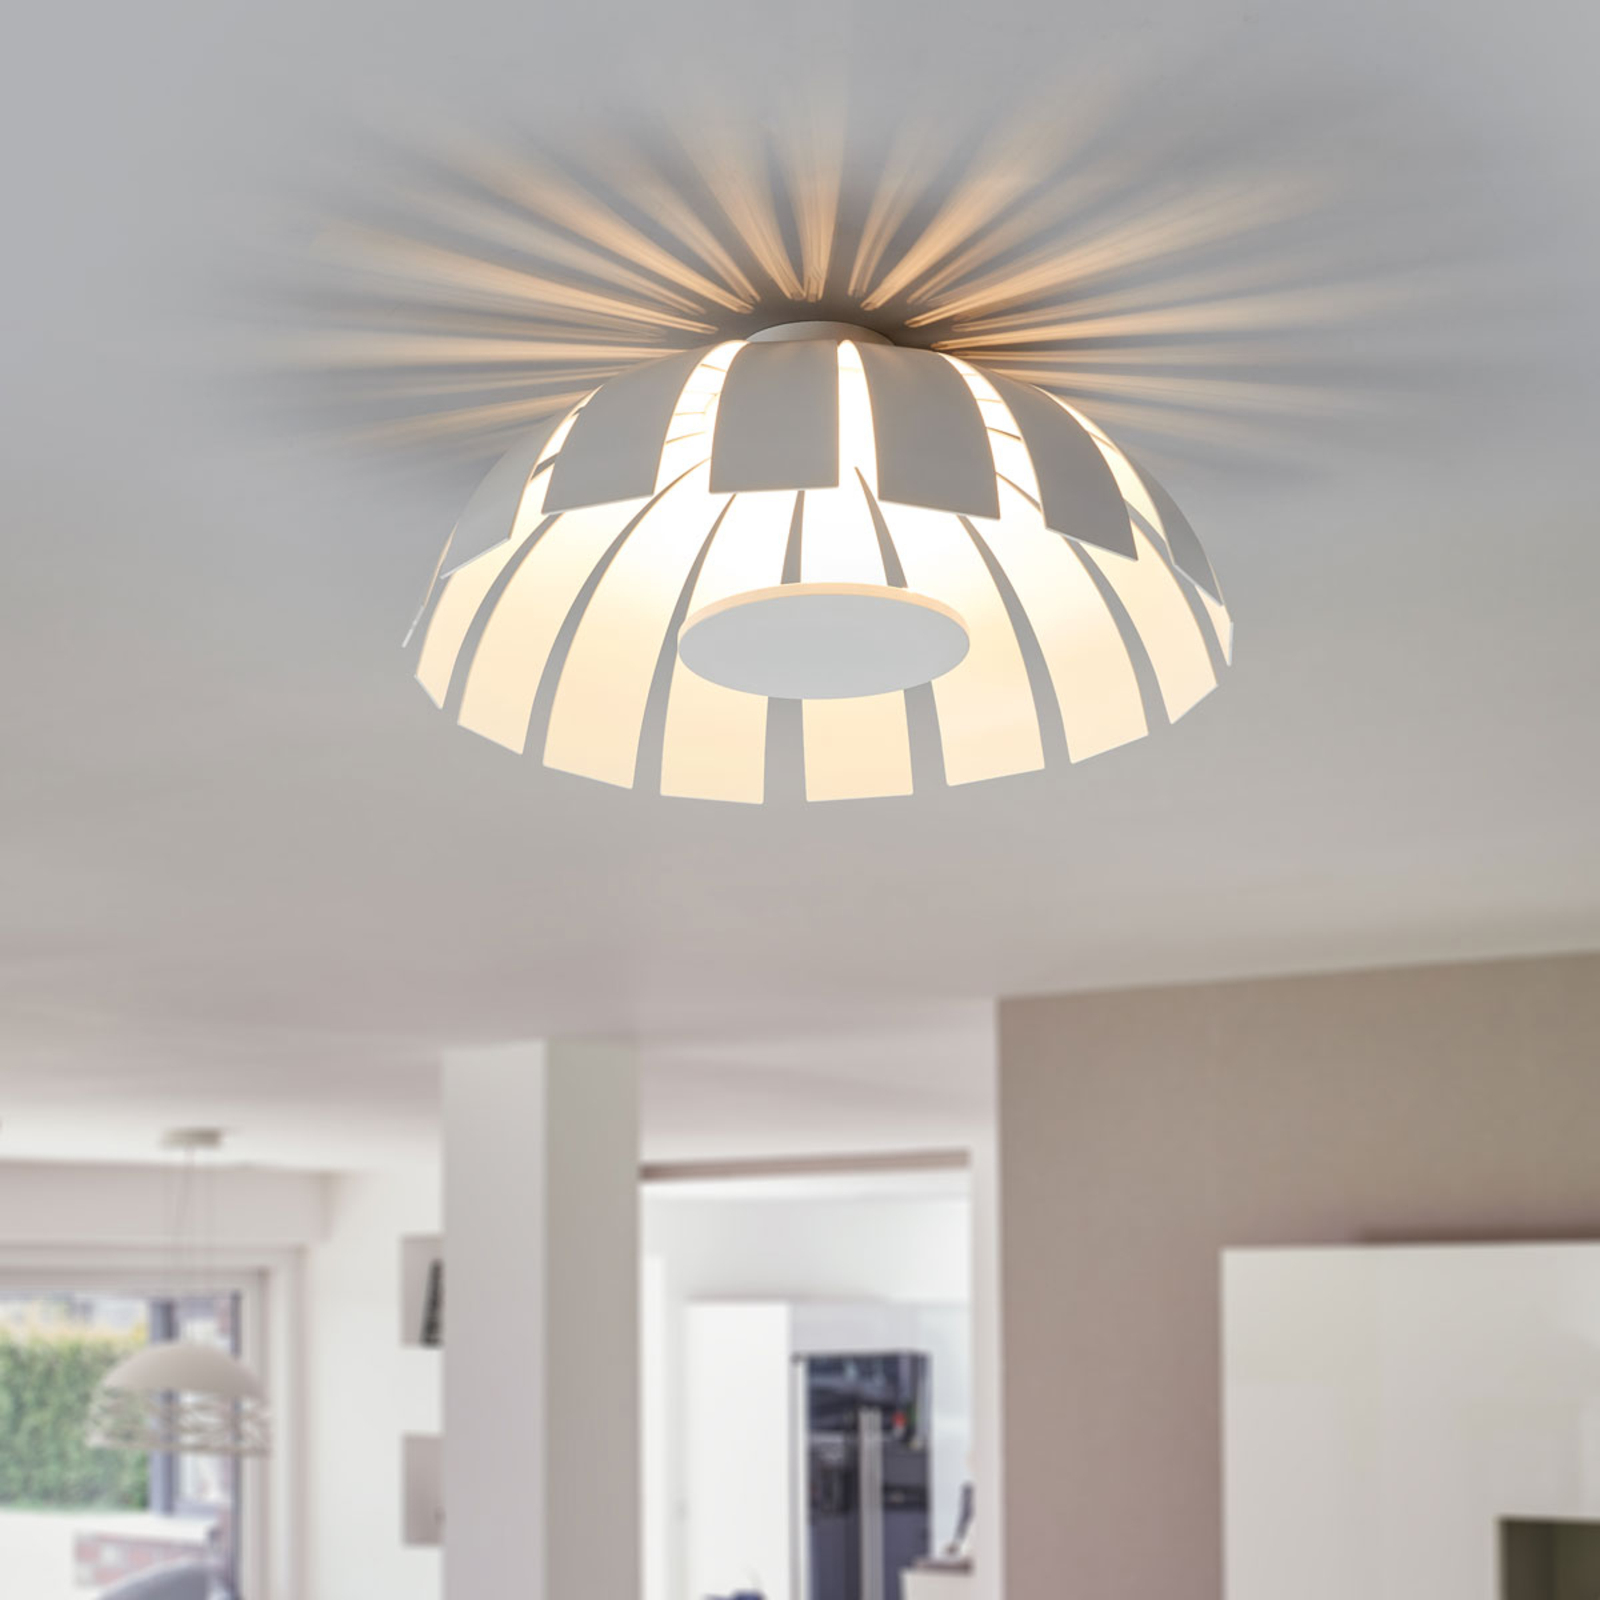 Biała designerska lampa sufitowa LED Loto, 33 cm